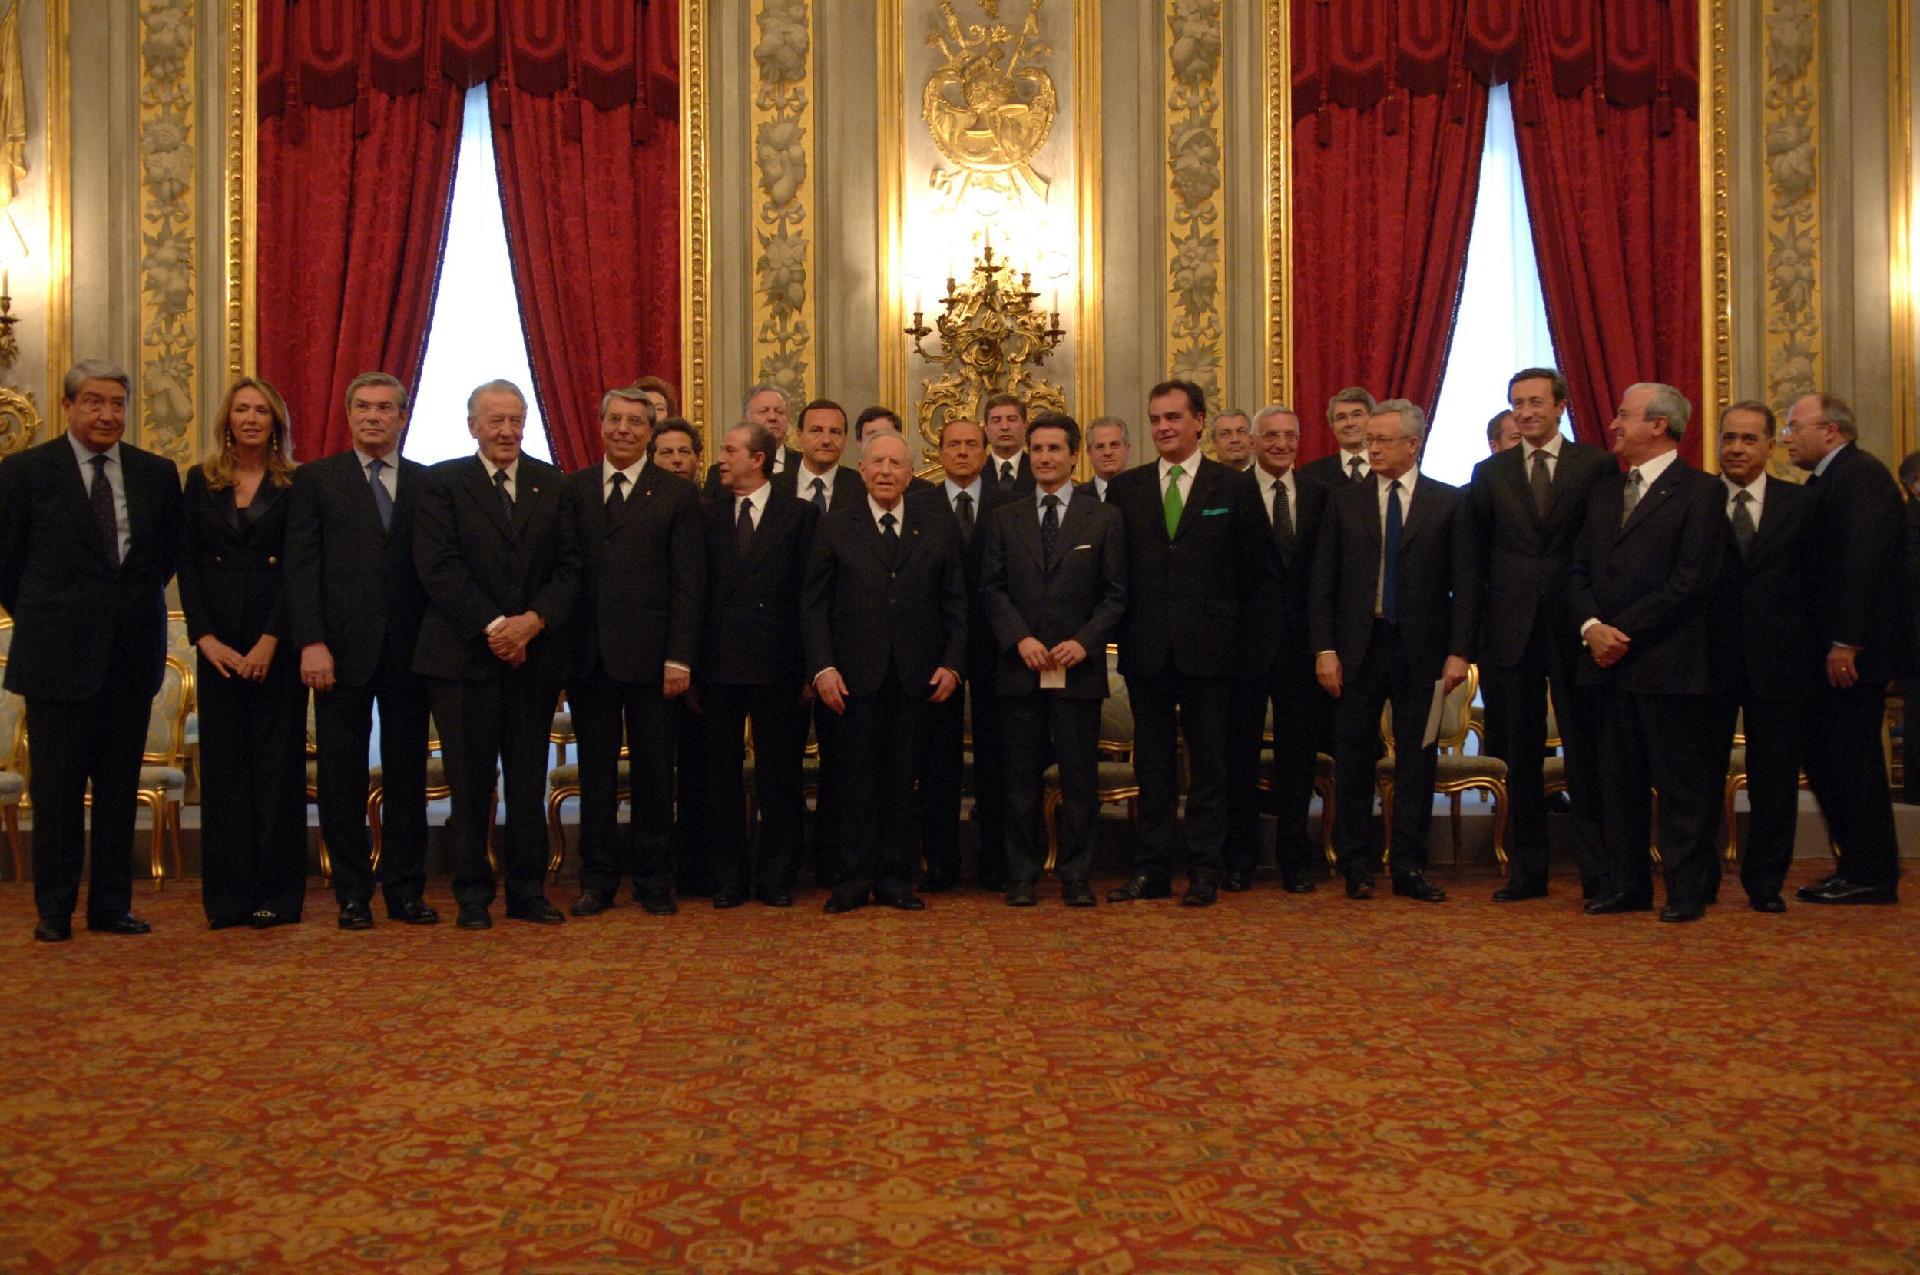 III Governo Berlusconi, 23 aprile 2005